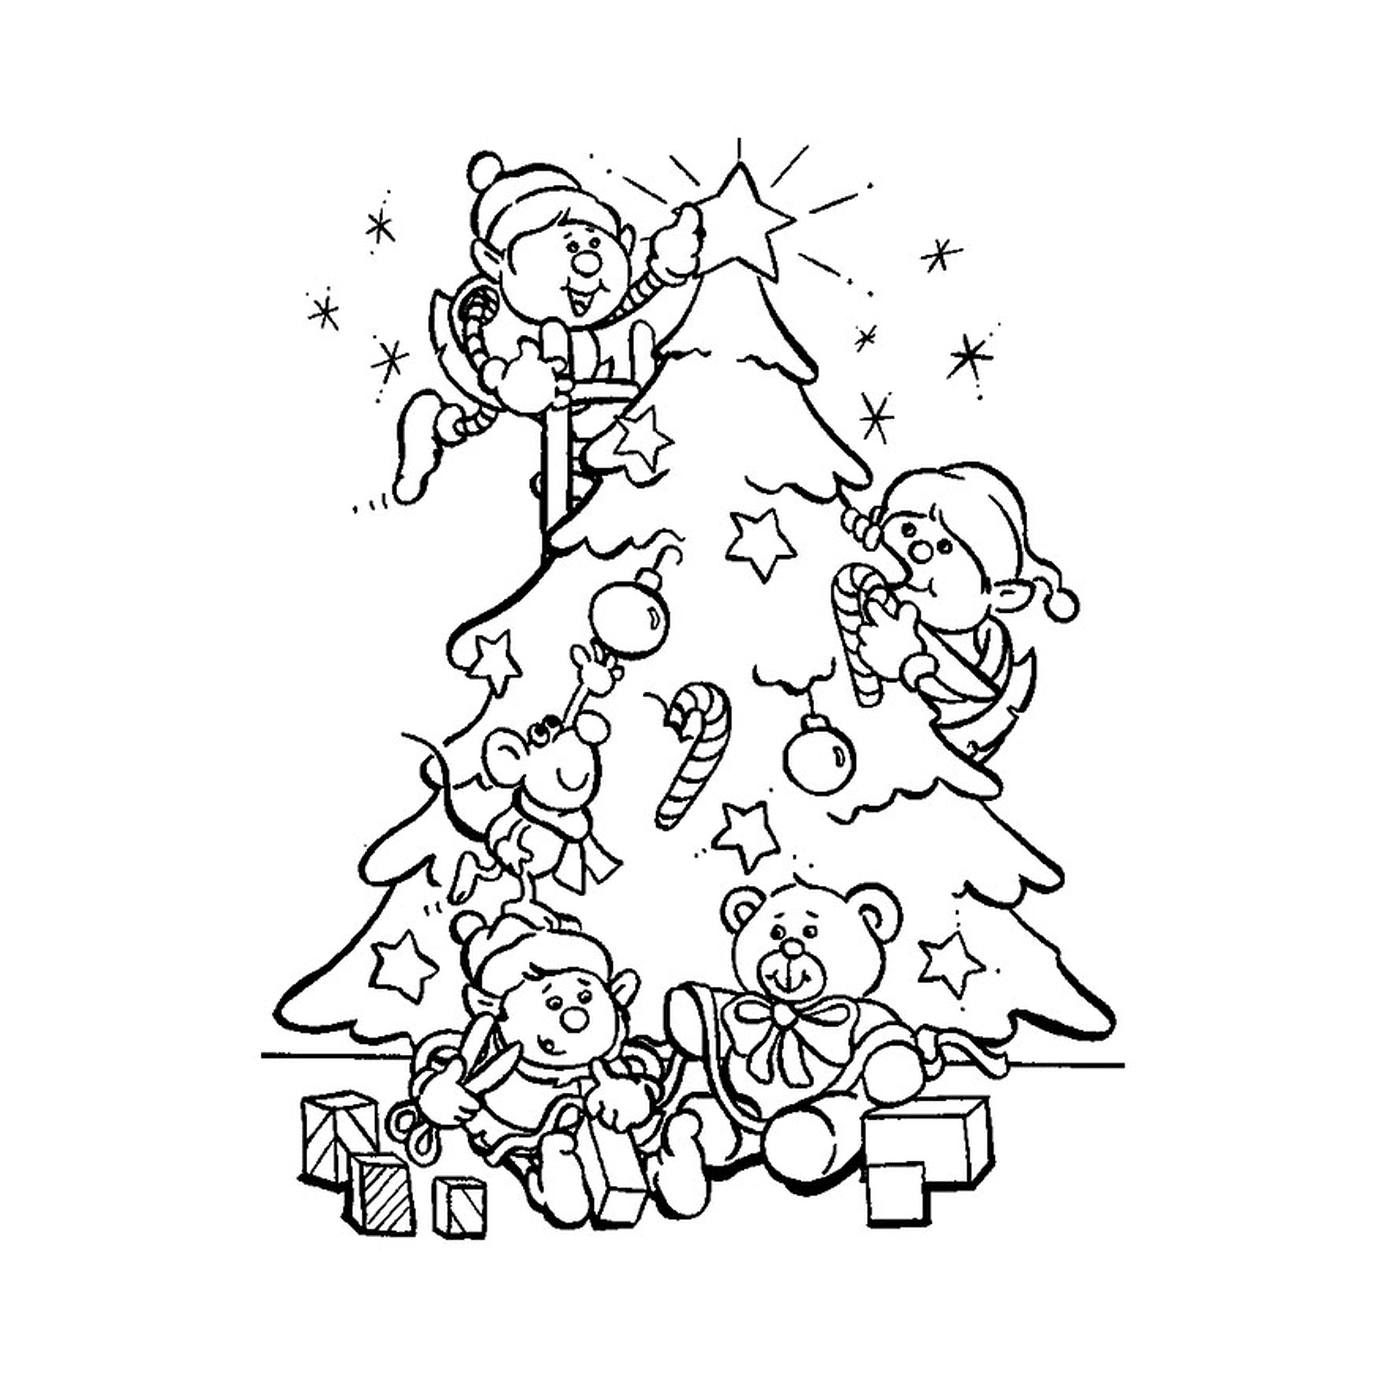  Lutins decorating a Christmas tree 